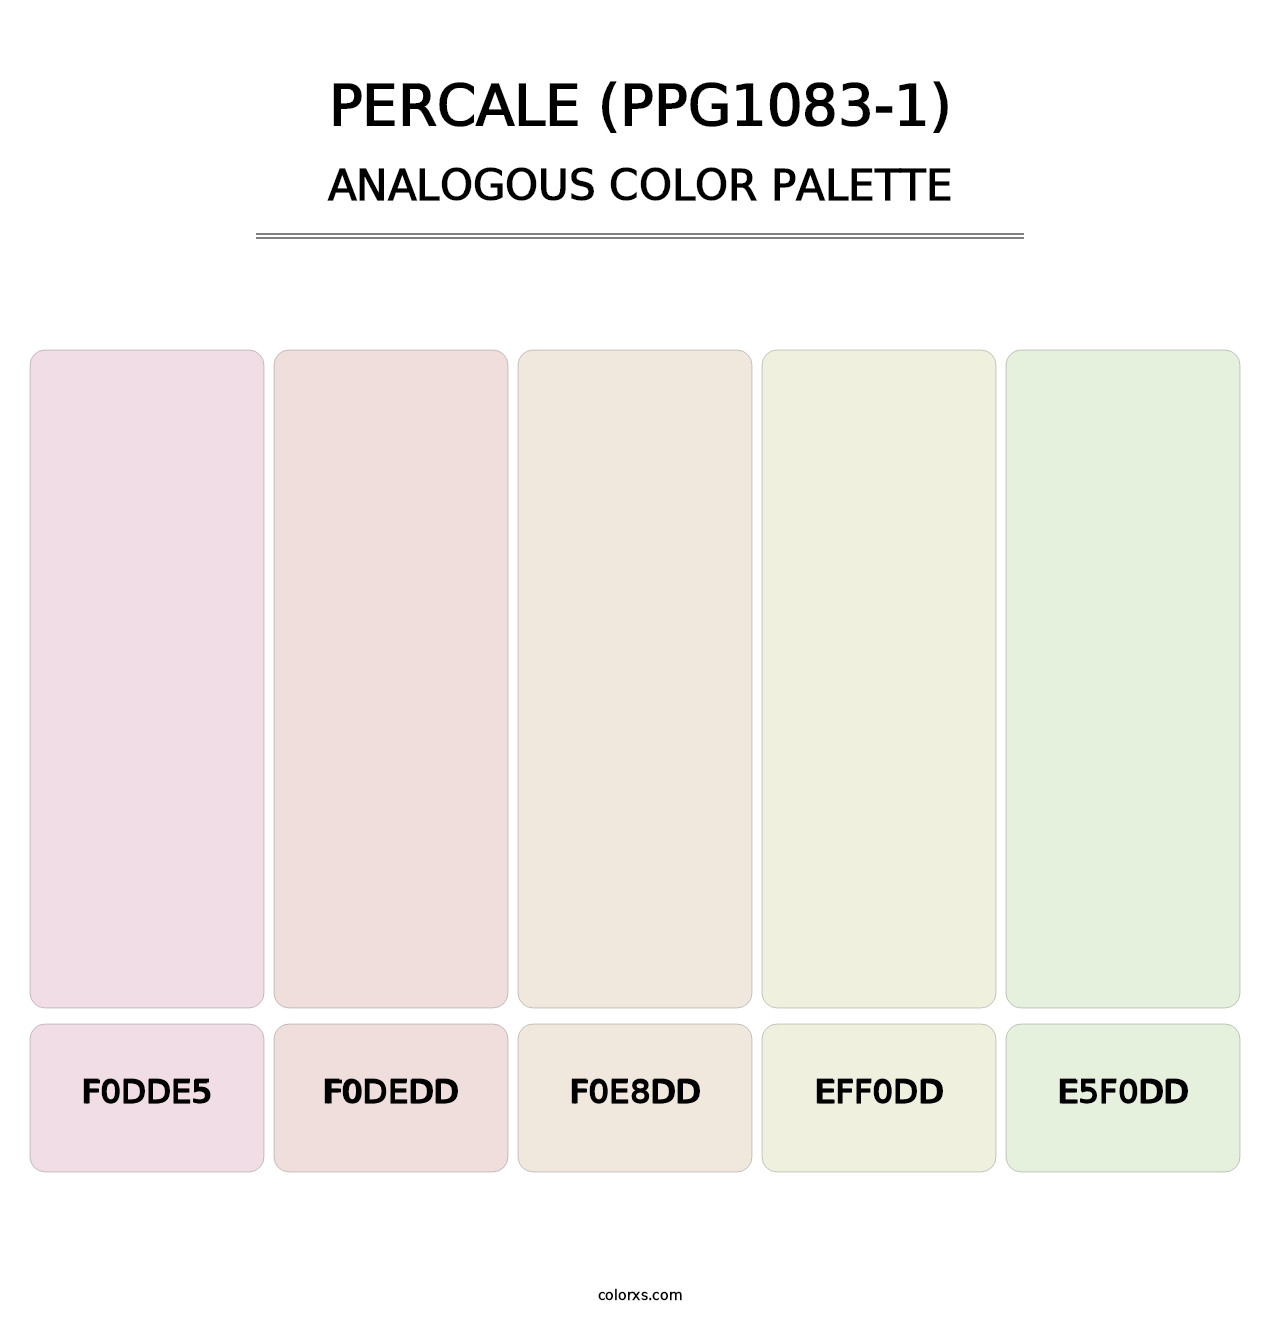 Percale (PPG1083-1) - Analogous Color Palette